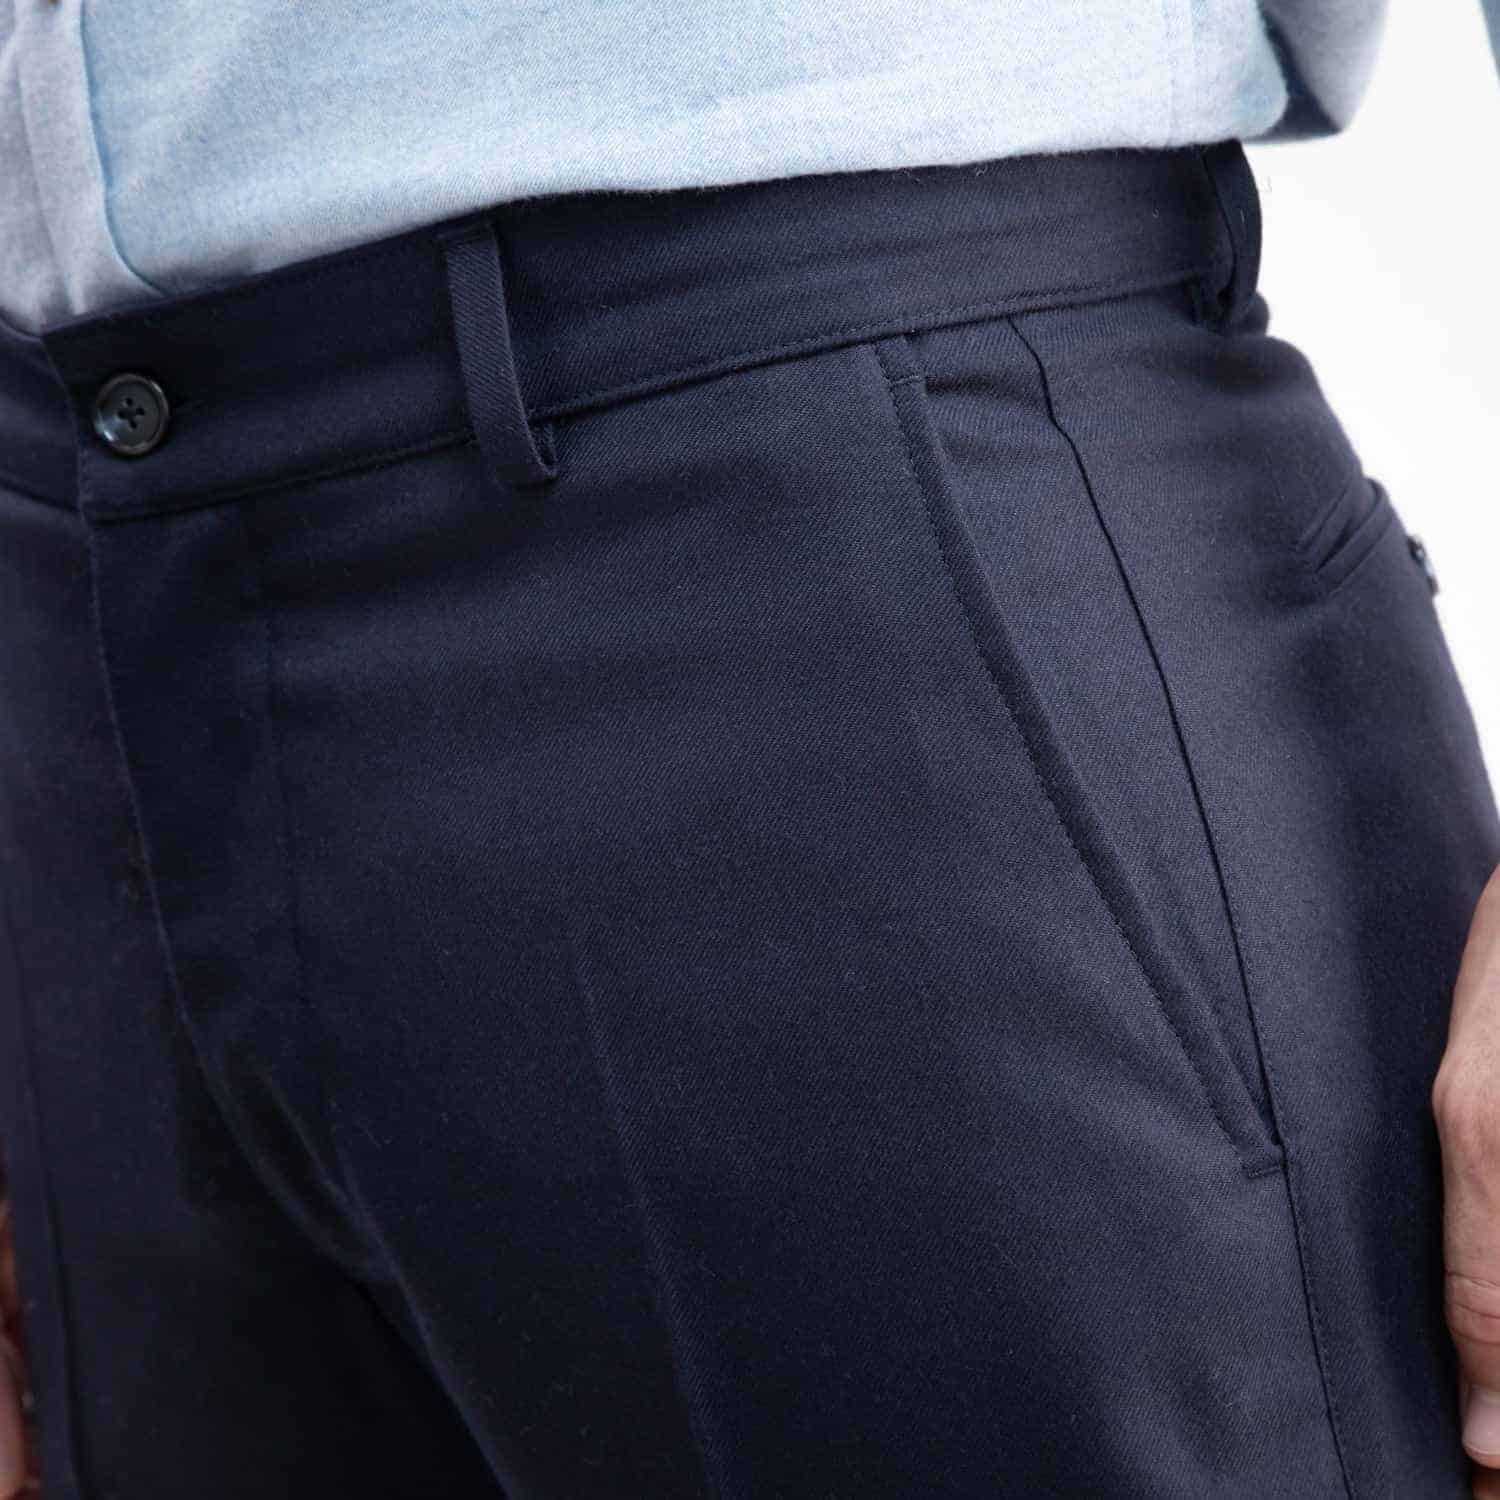 El Capitan Trouser - Navy - Men's Pants Made in USA